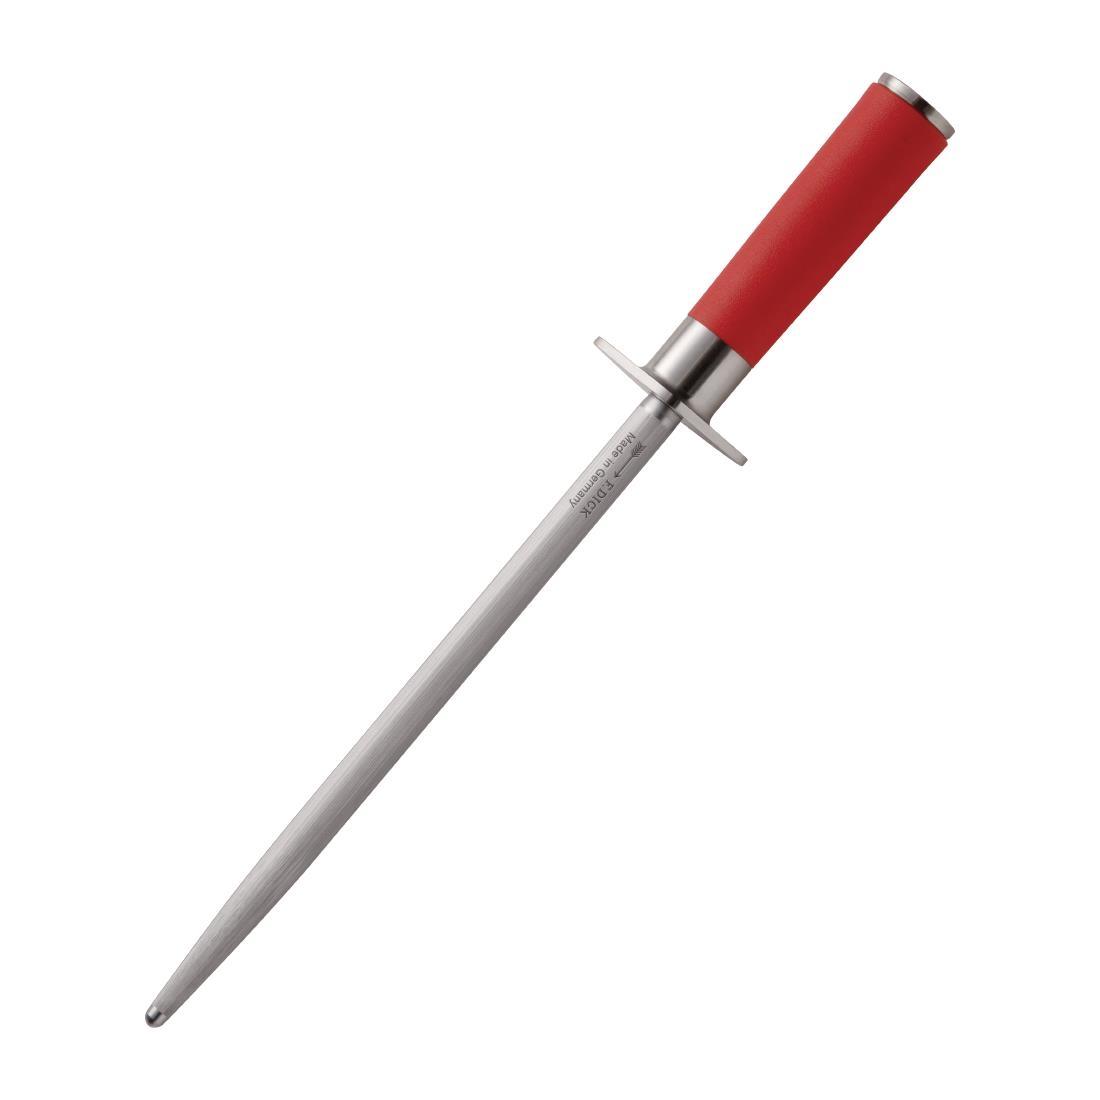 Dick Red Spirit Round Standard Knife Sharpening Steel 25cm - DE373  - 1